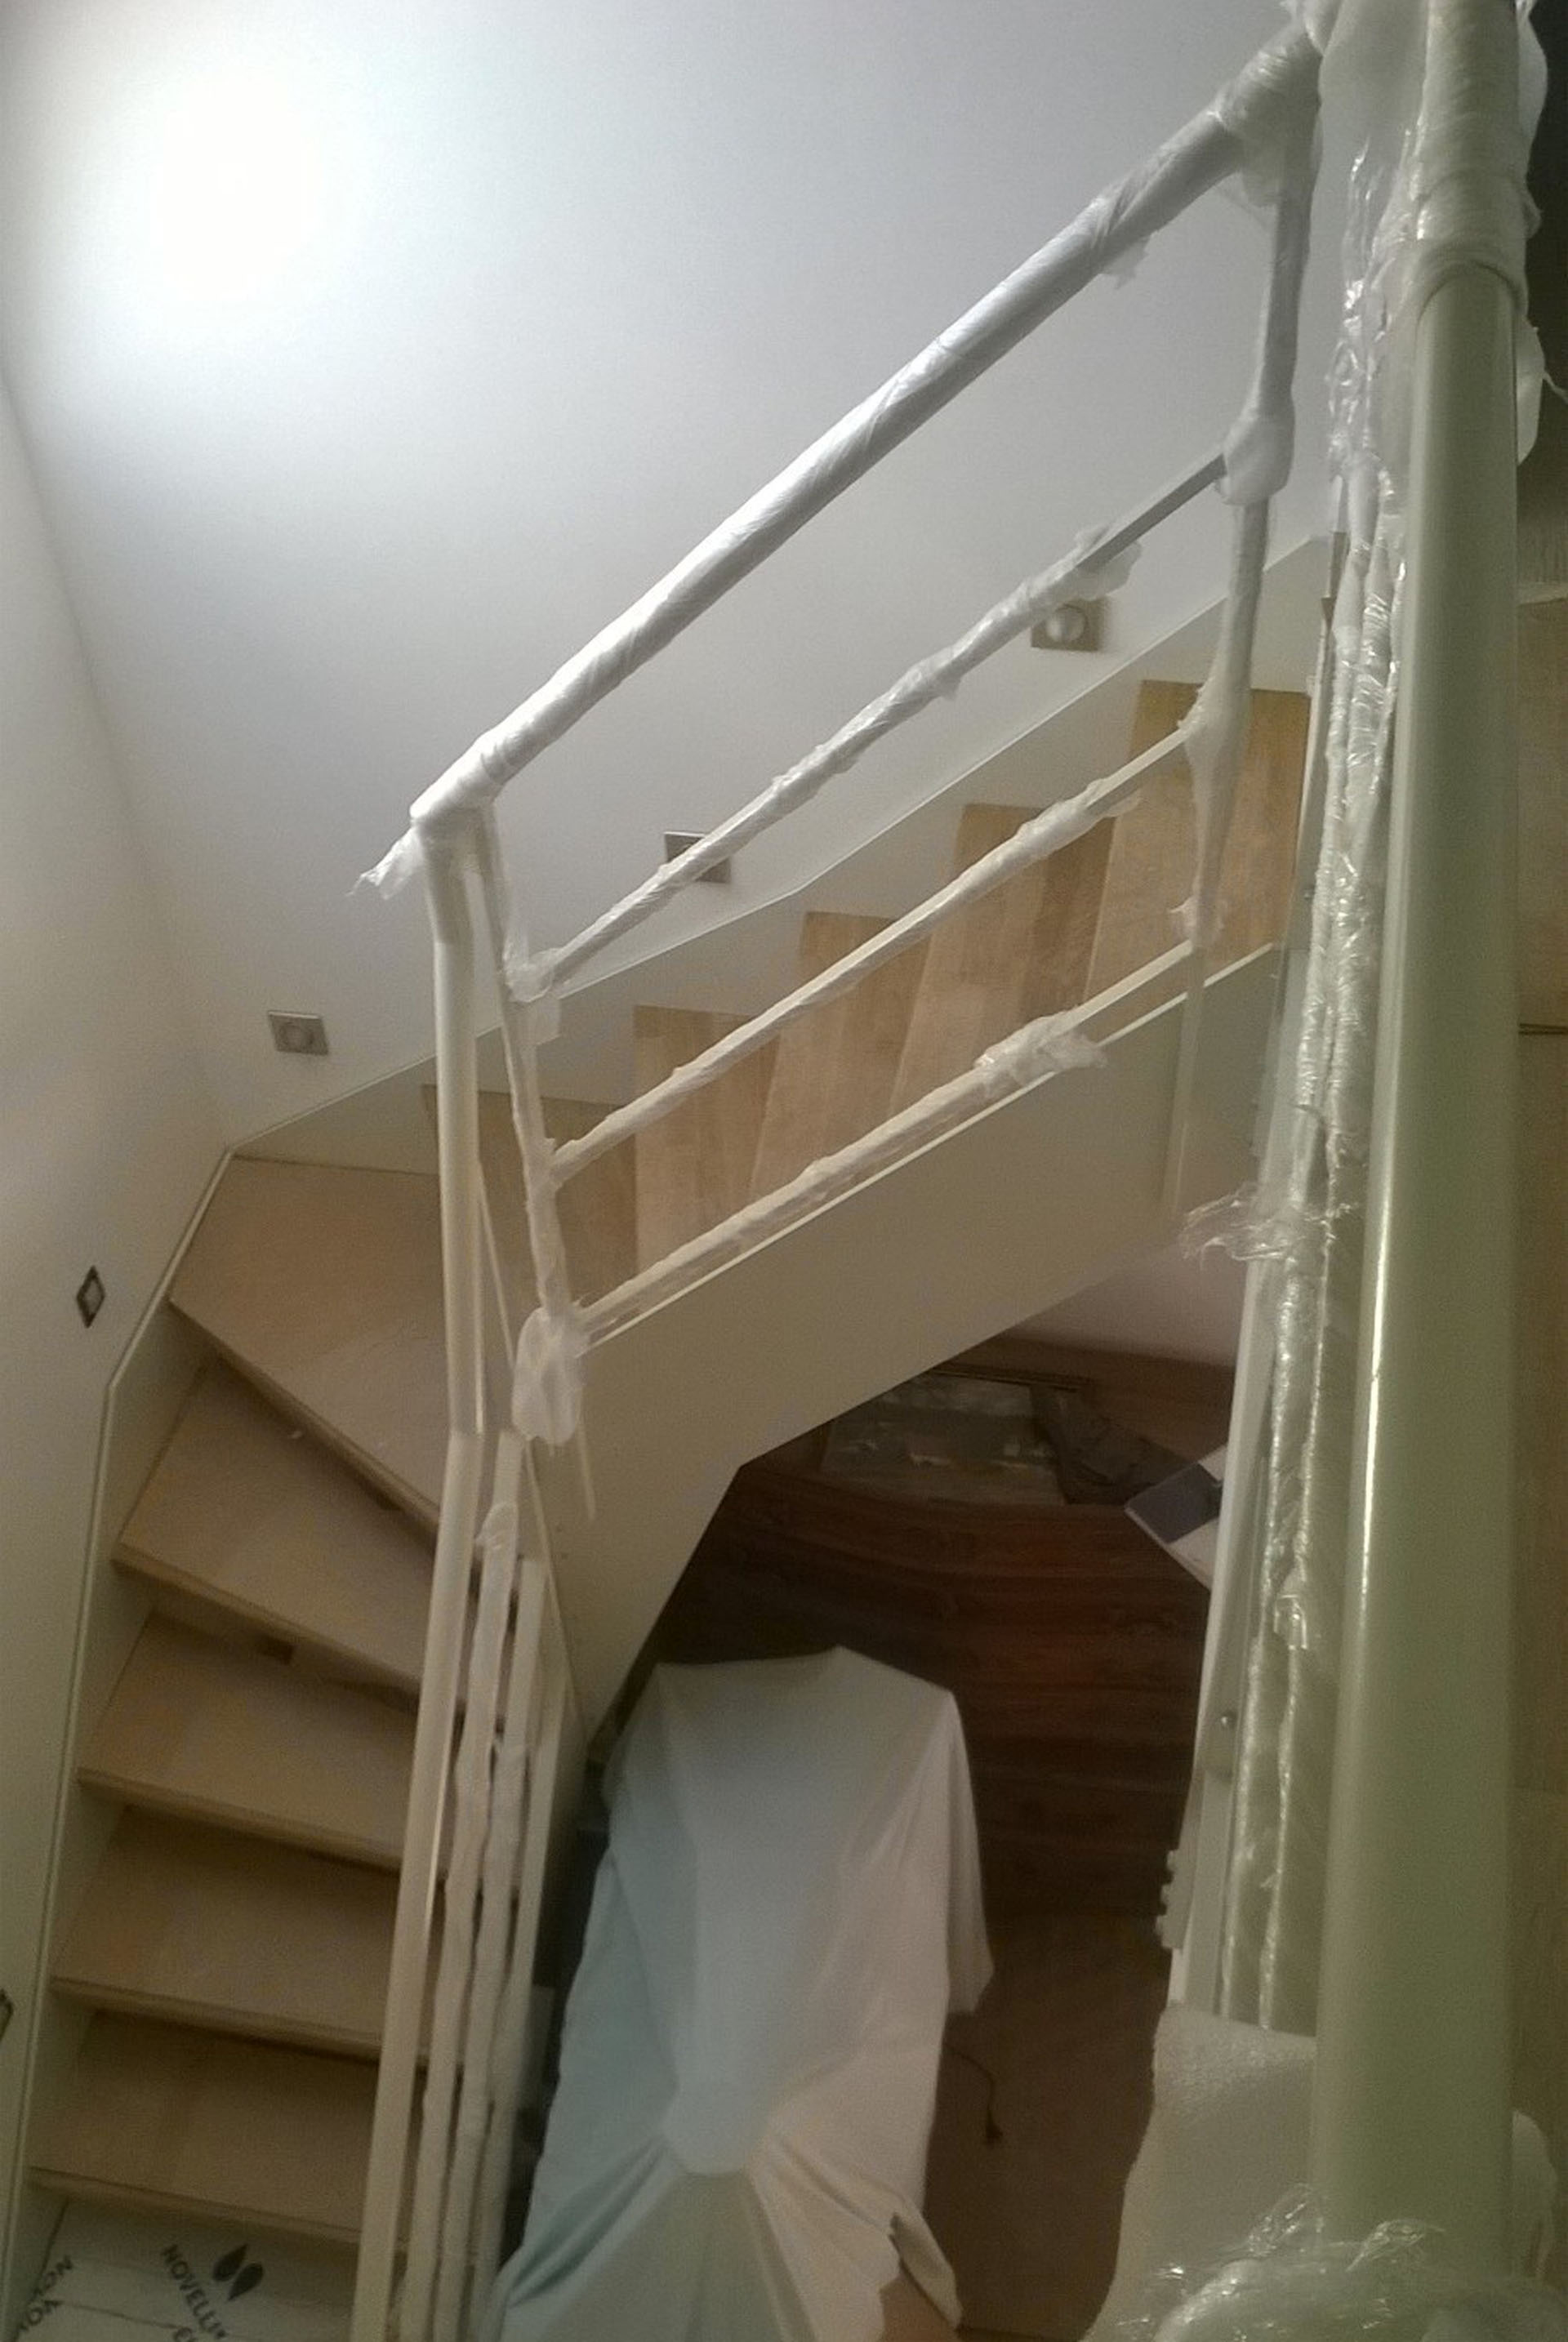 Escaliers - Mixte bois/métal peint